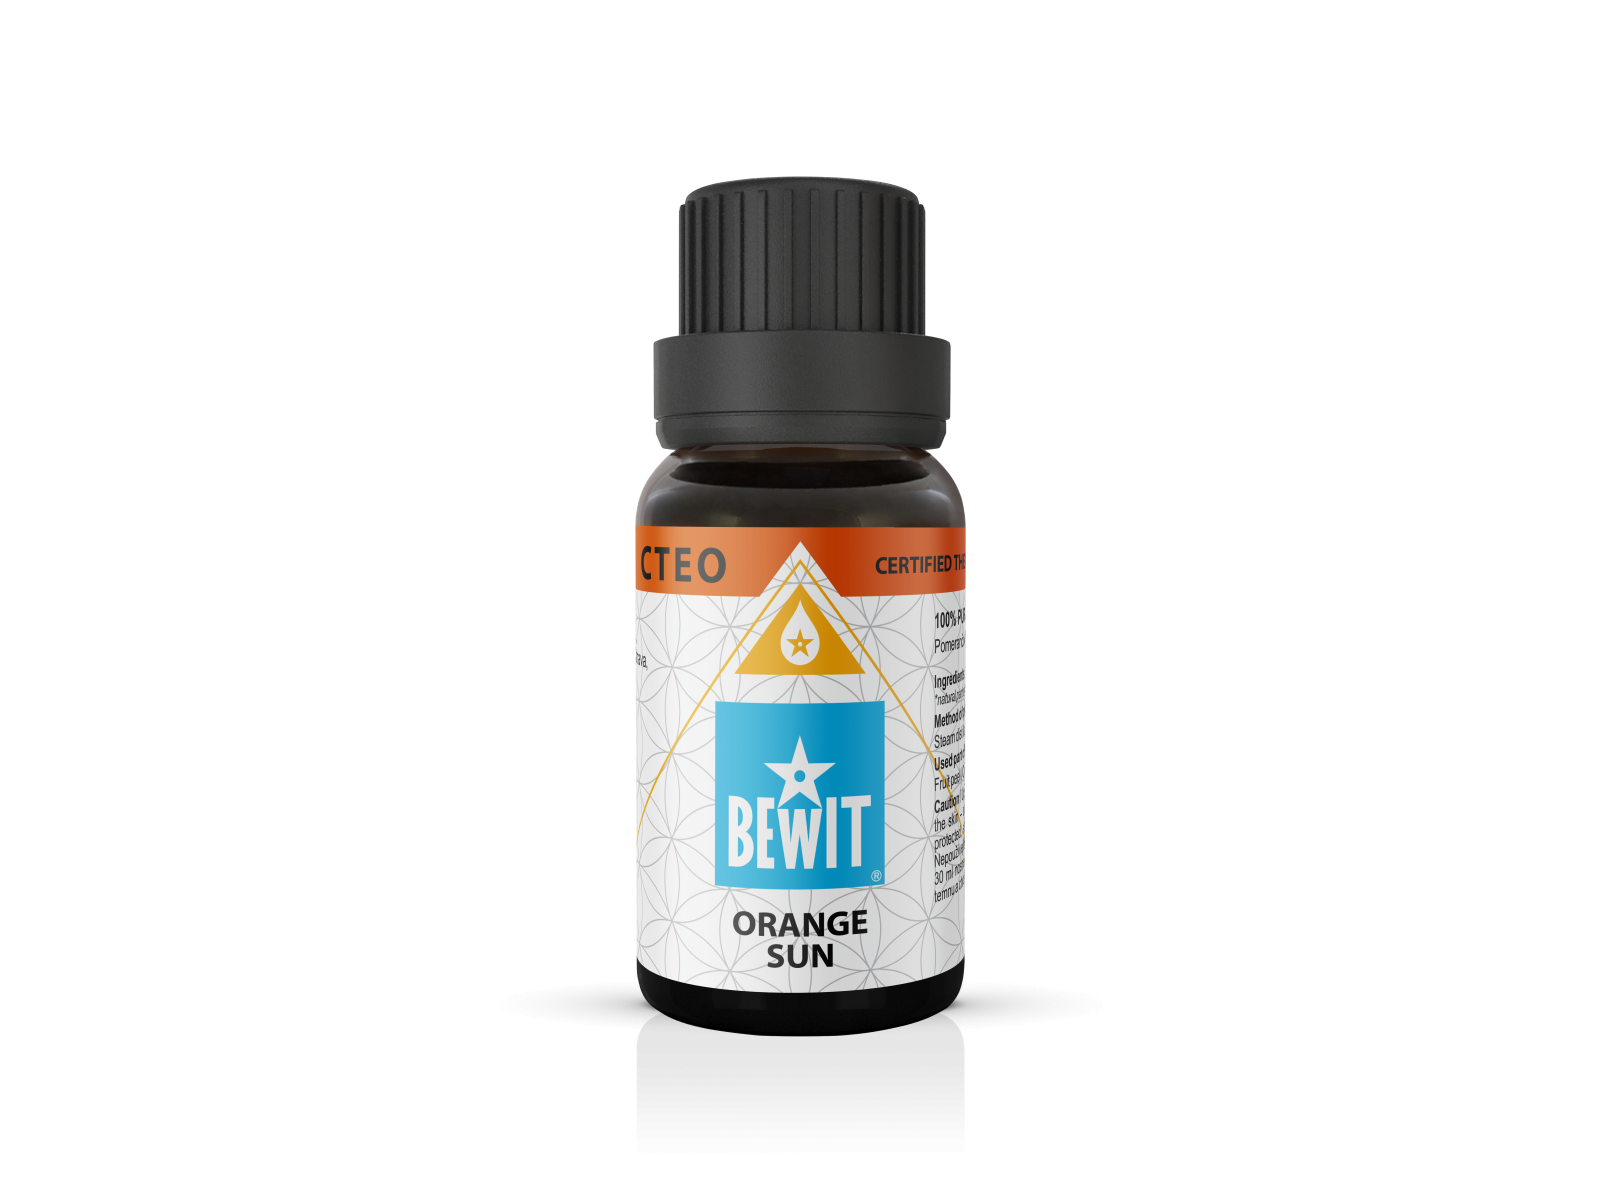 BEWIT Orange SUN - 100% pure and natural CTEO® essential oil - 3